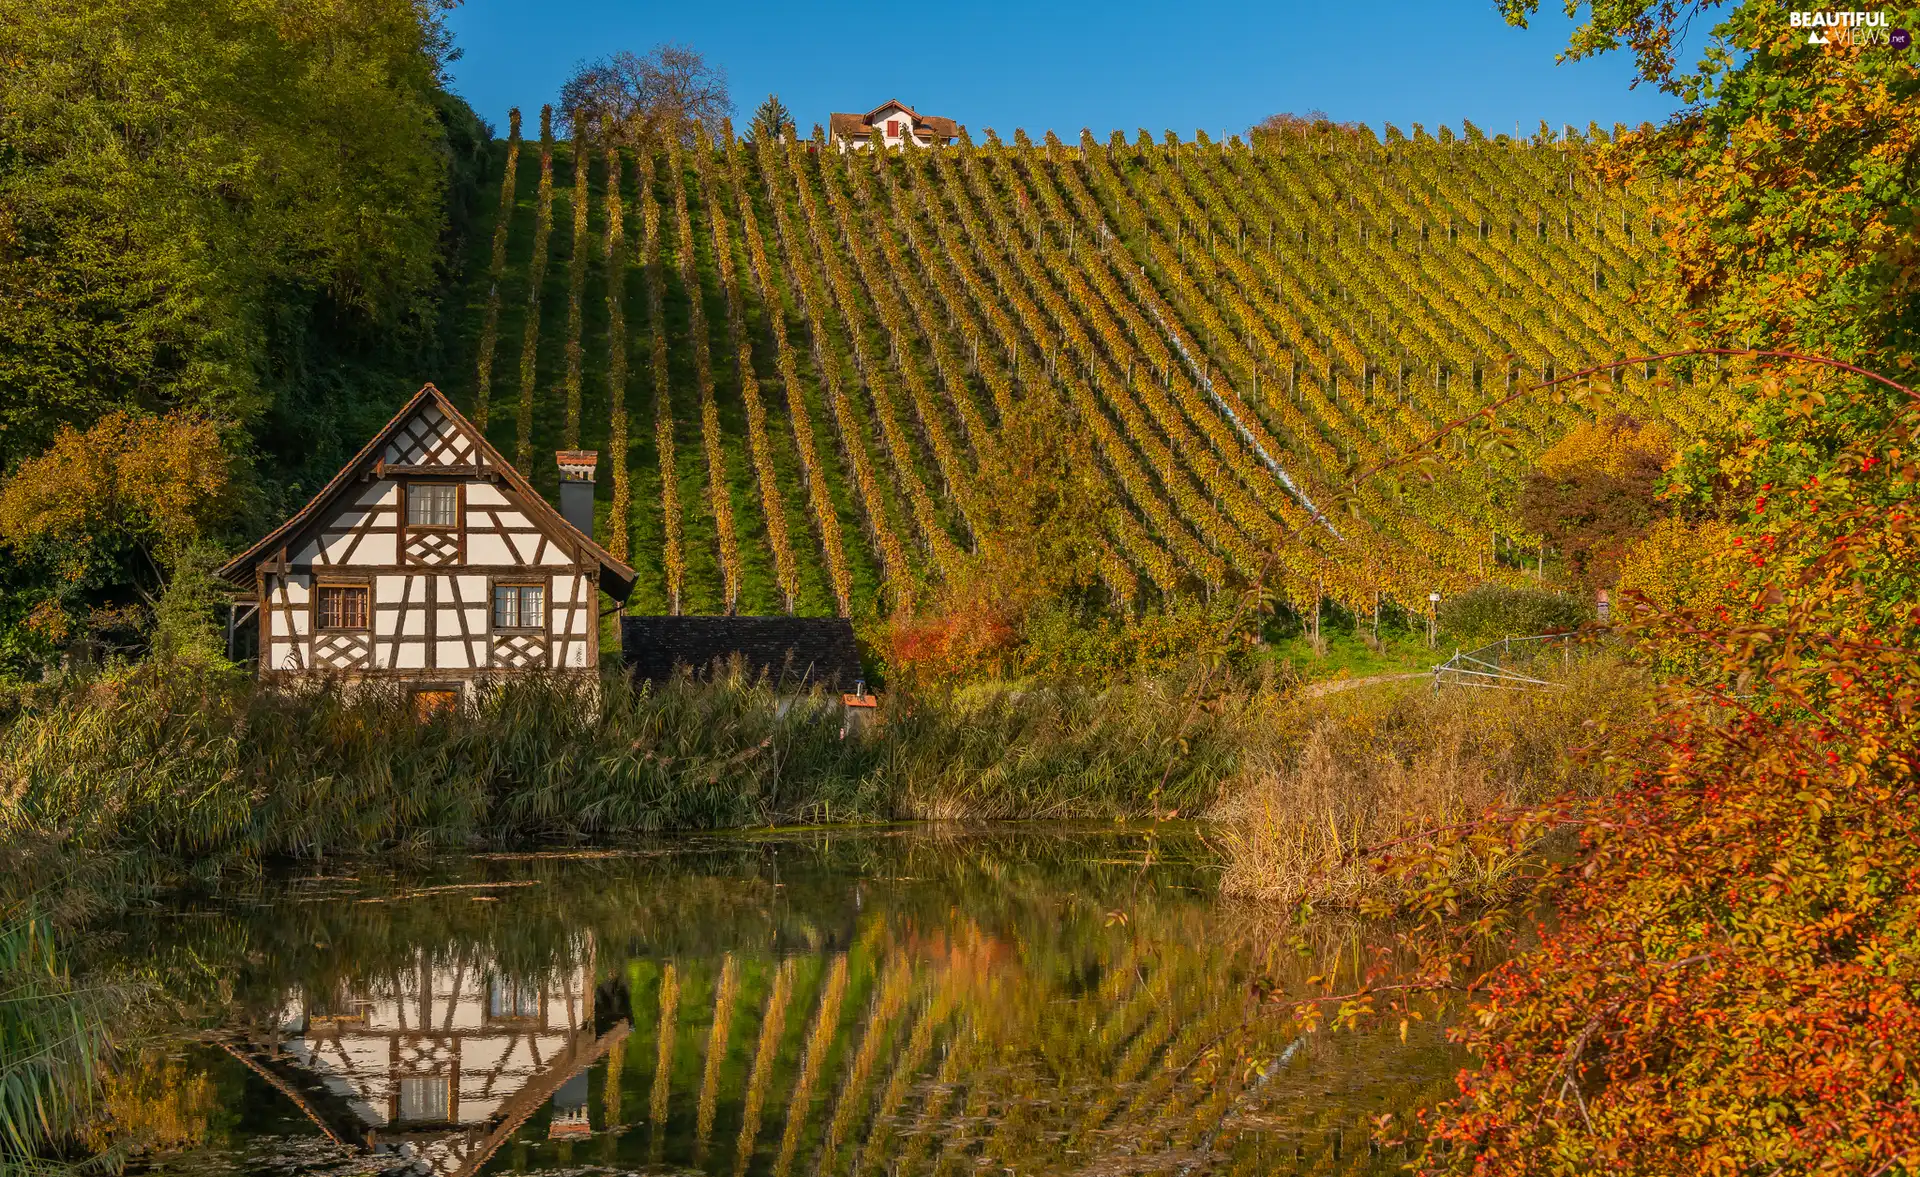 The Hills, autumn, Pond - car, scrub, house, vineyards